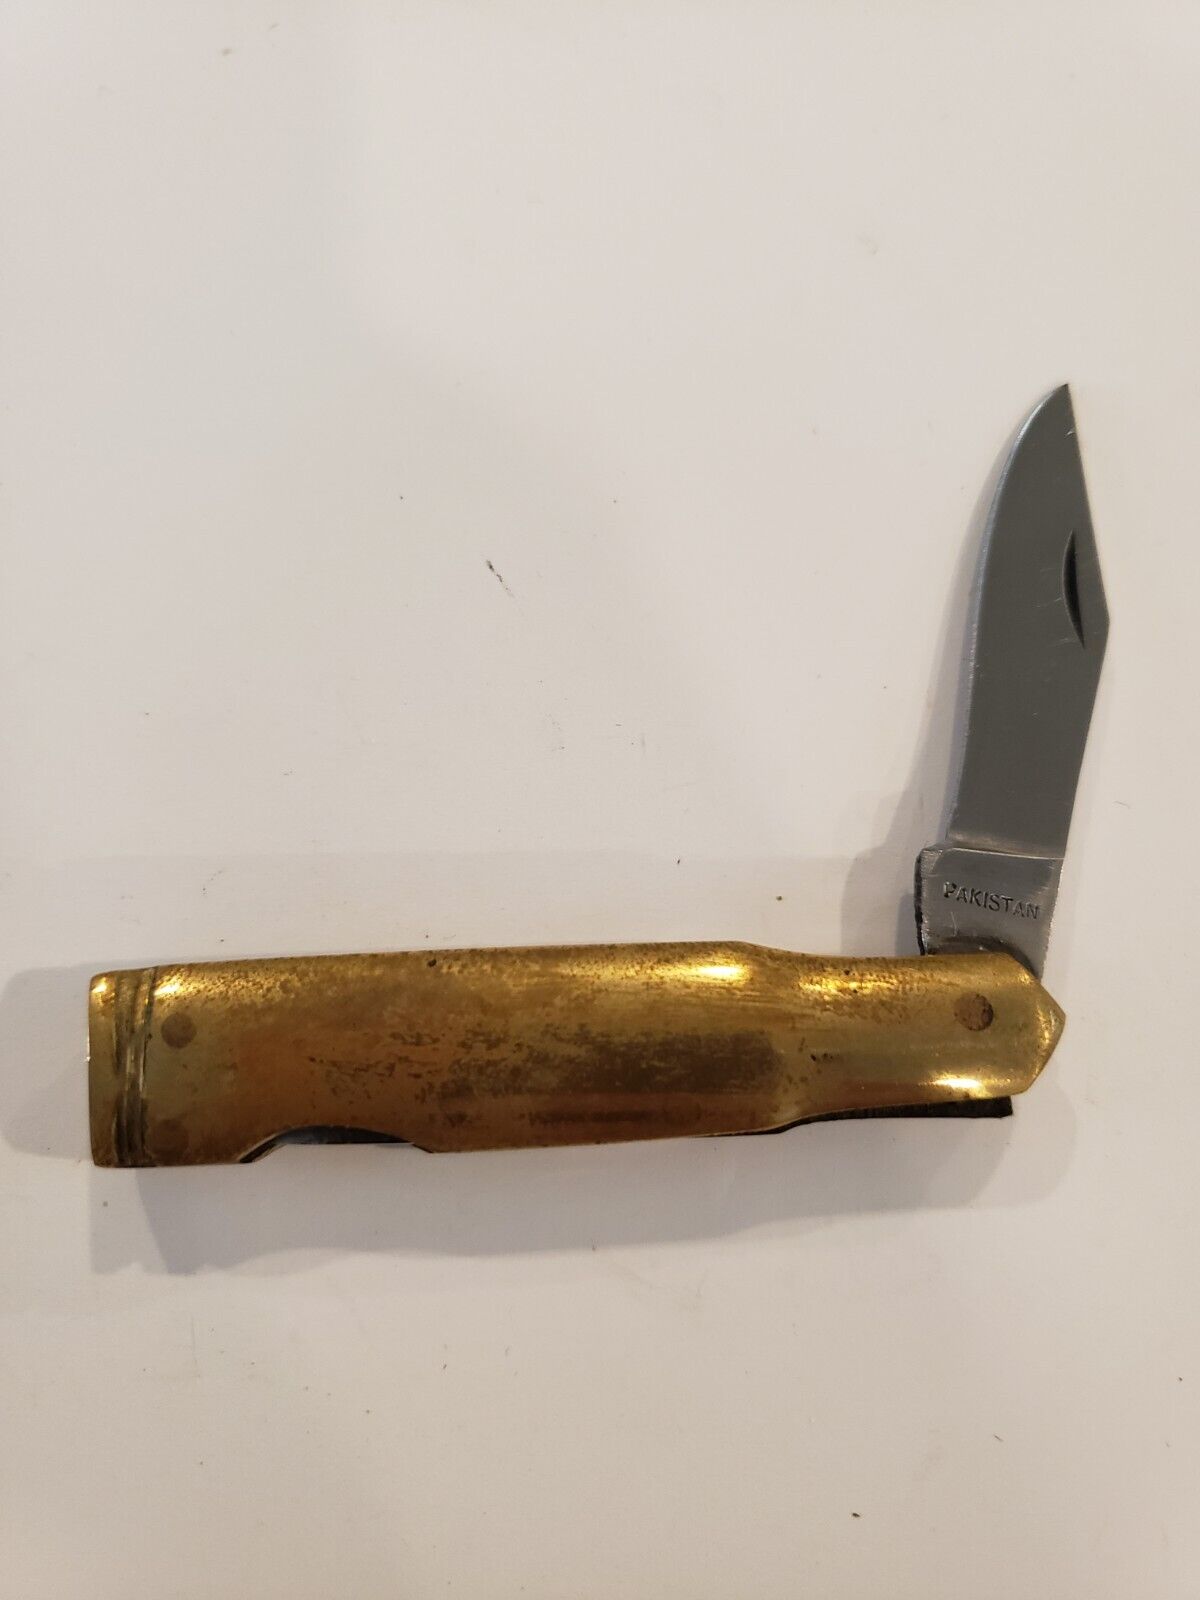 HotKey Knife Sale Rifle Man Pakistan Knife